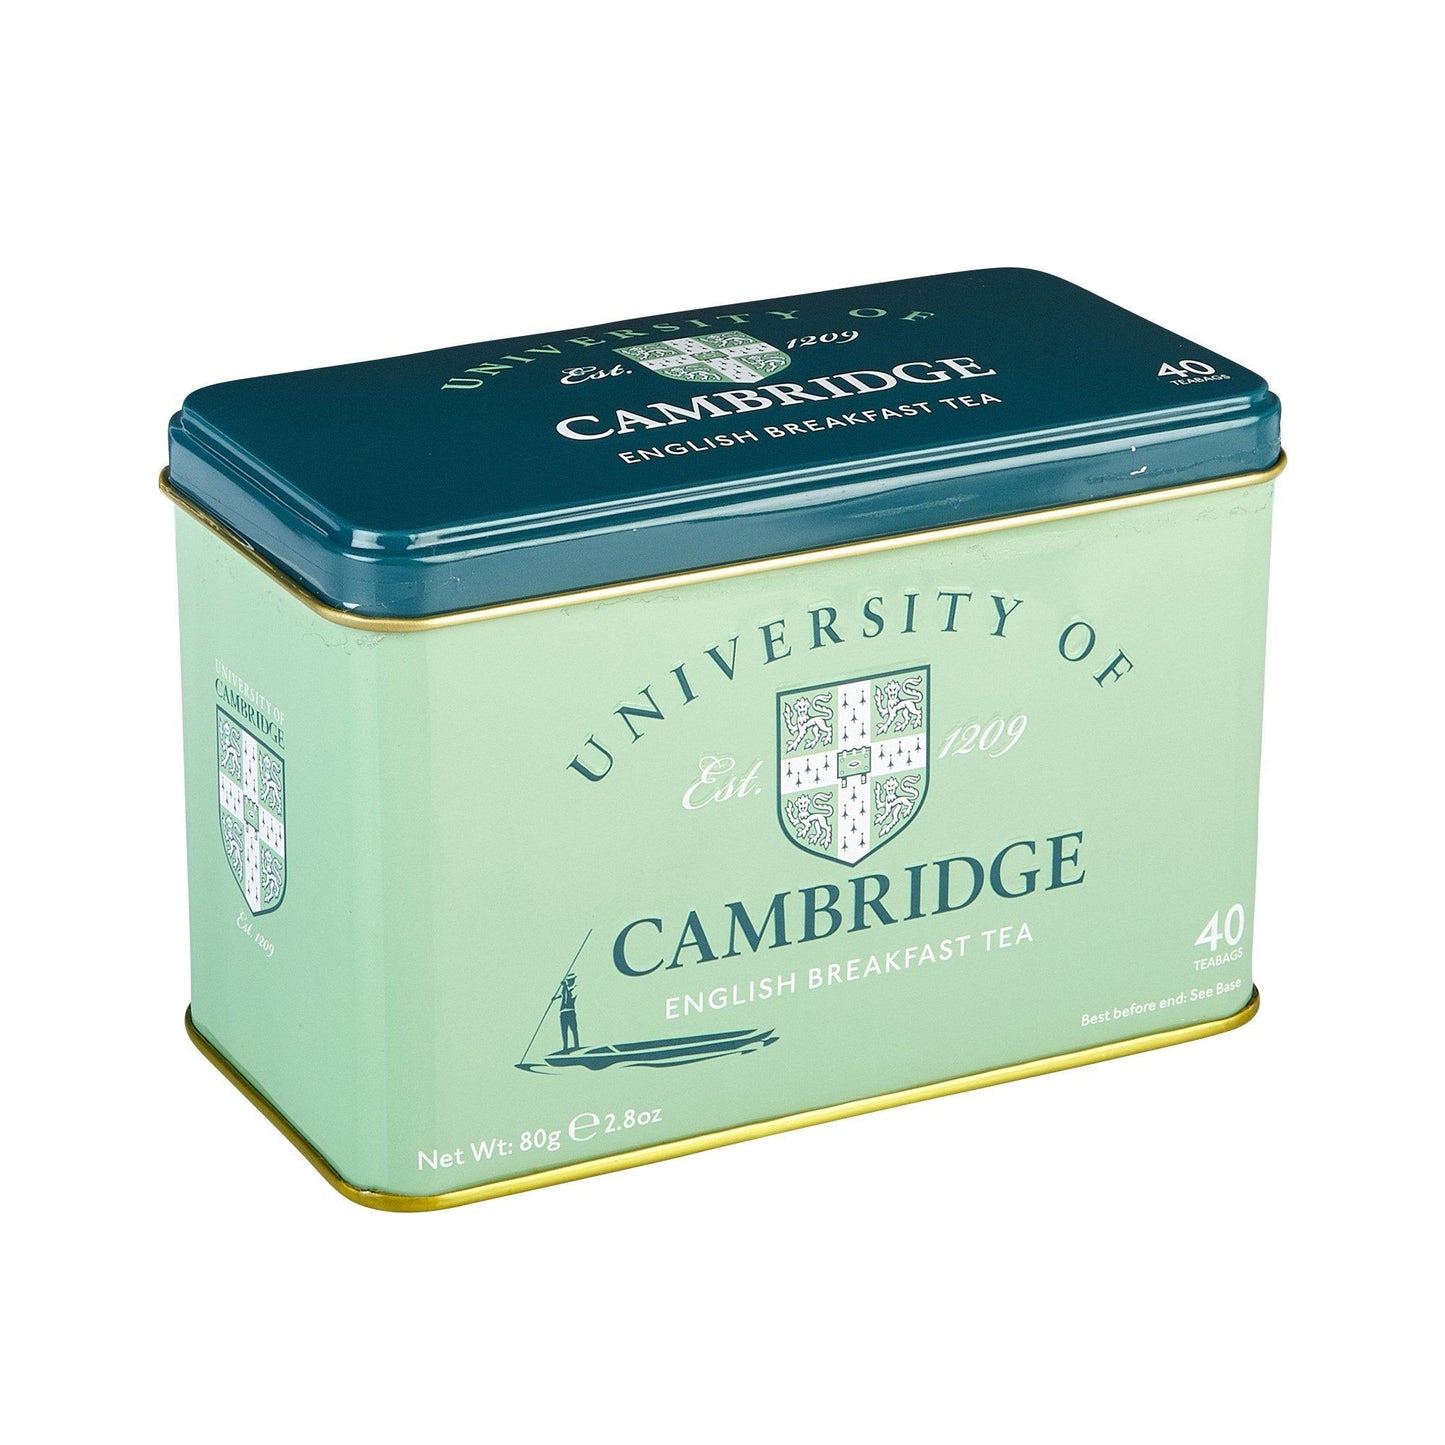 University Of Cambridge English Breakfast Tea Tin 40 Teabags Black Tea New English Teas 